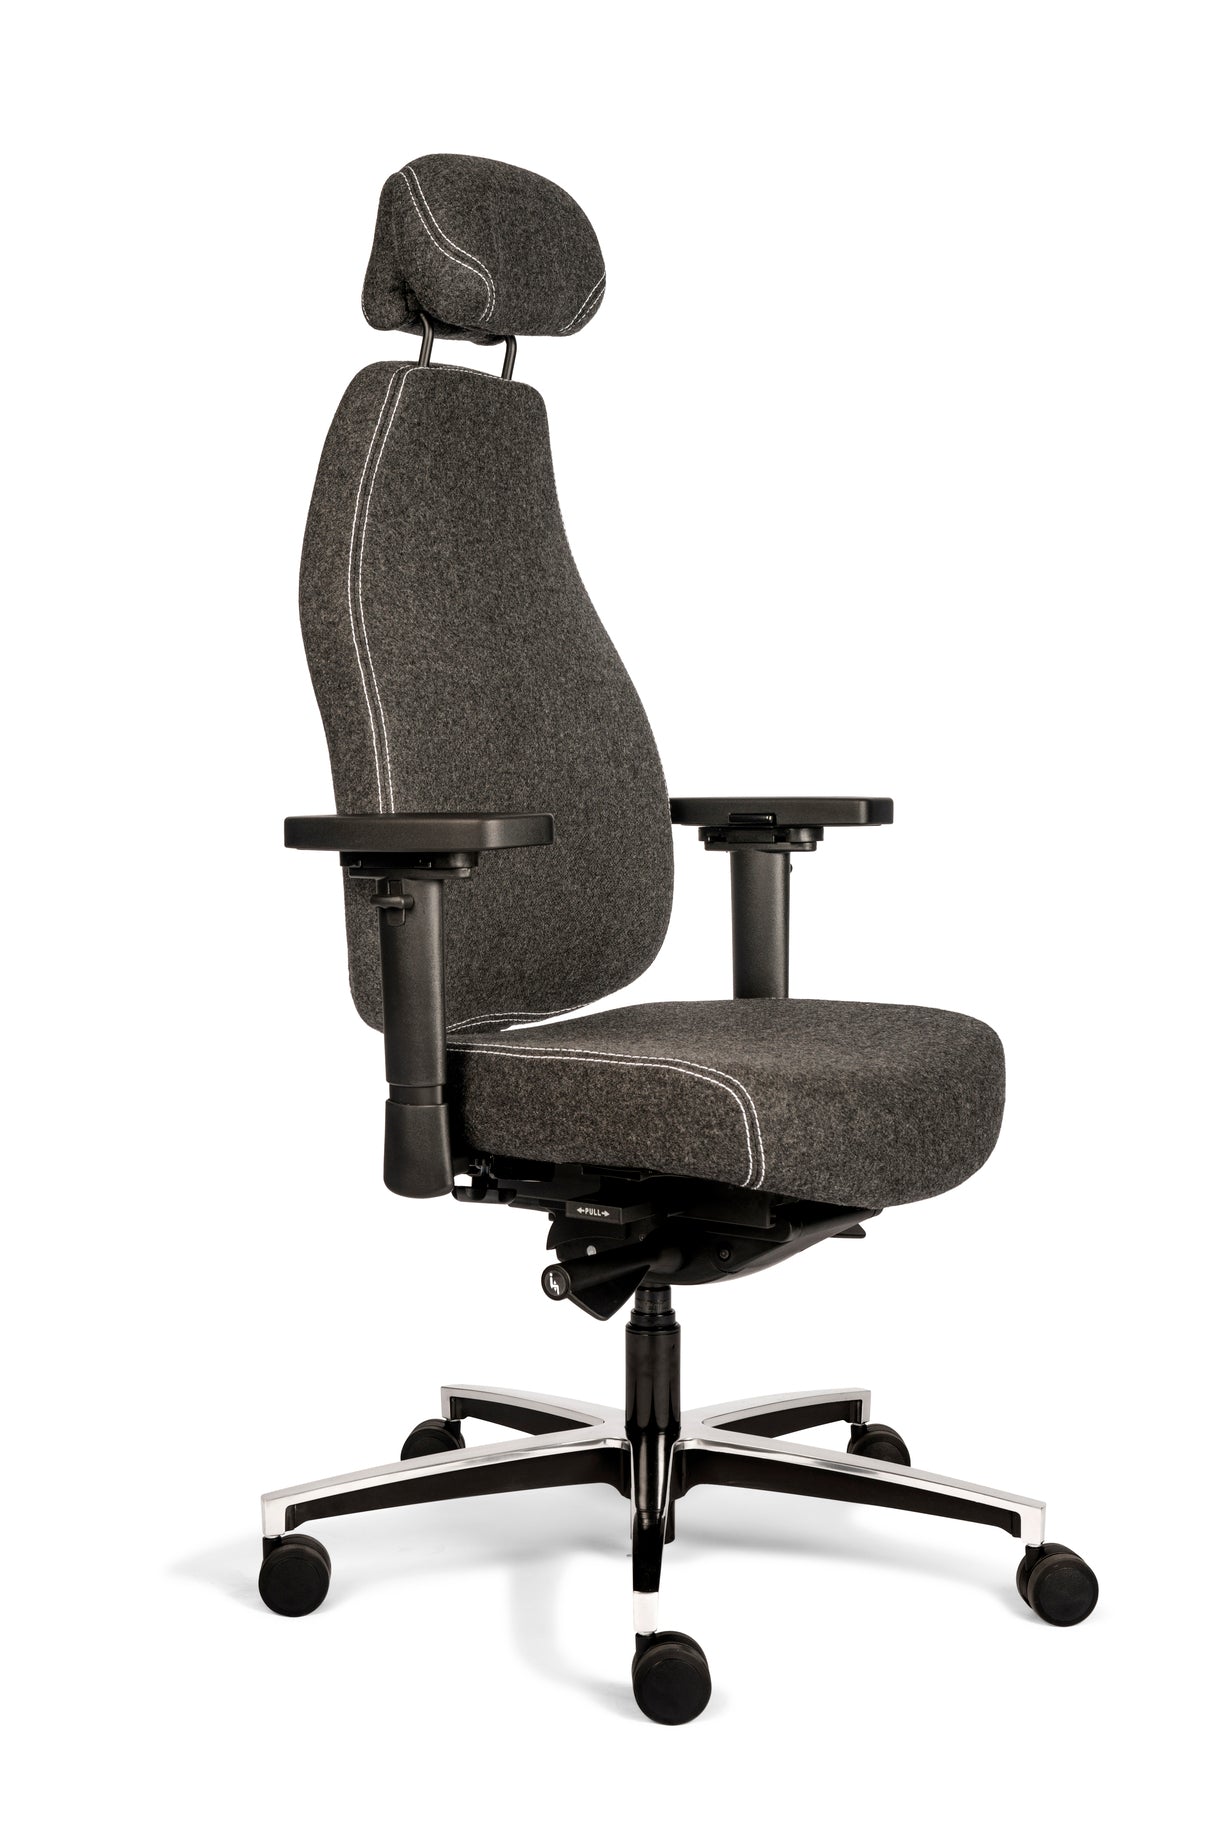 Chairlab Monaco comfort - High-end bureaustoel - Chairlab